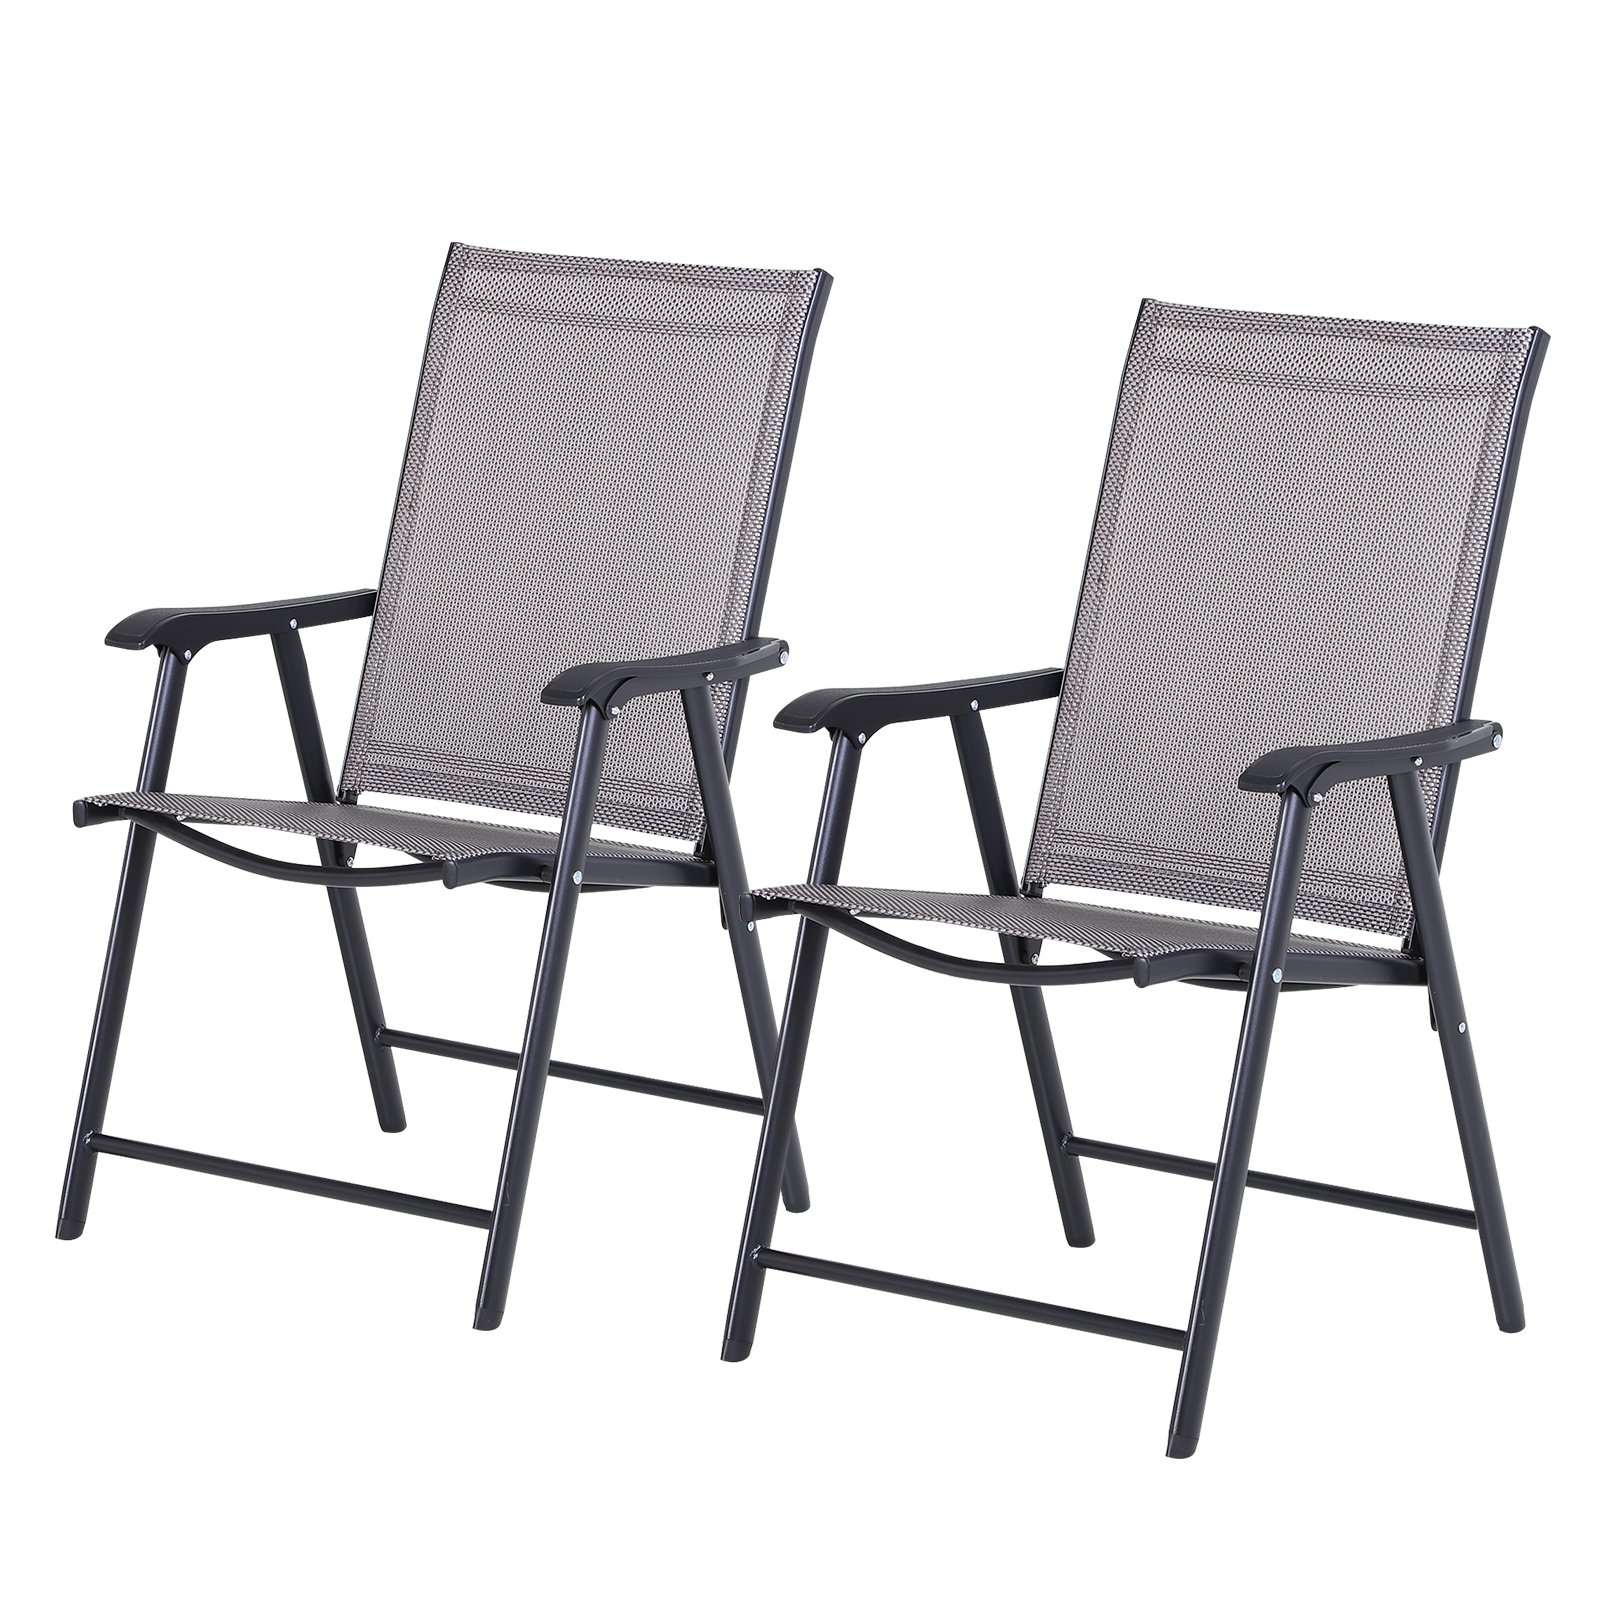 Conjunto de 2 sillas Outsunny plegables para exterior con reposabrazos